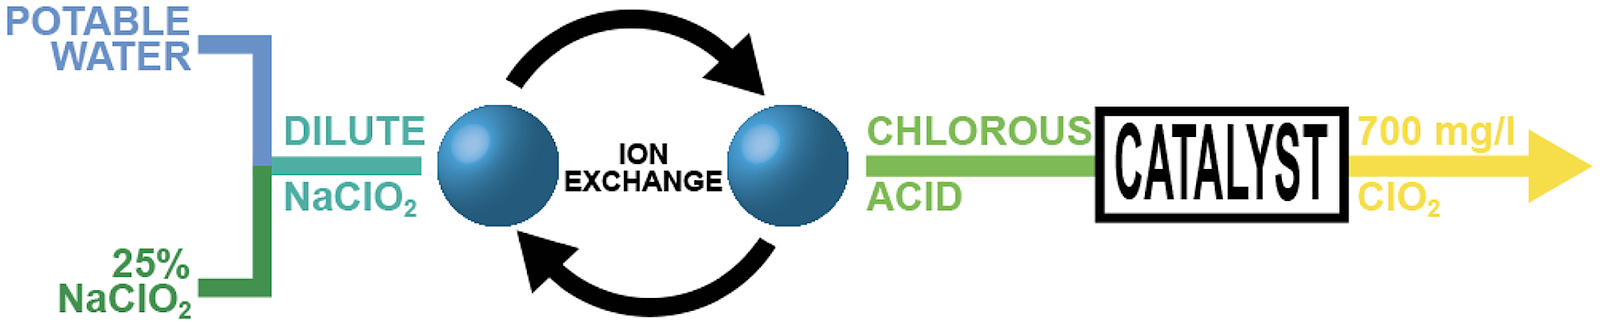 Catalytic Chlorine Dioxide diagram